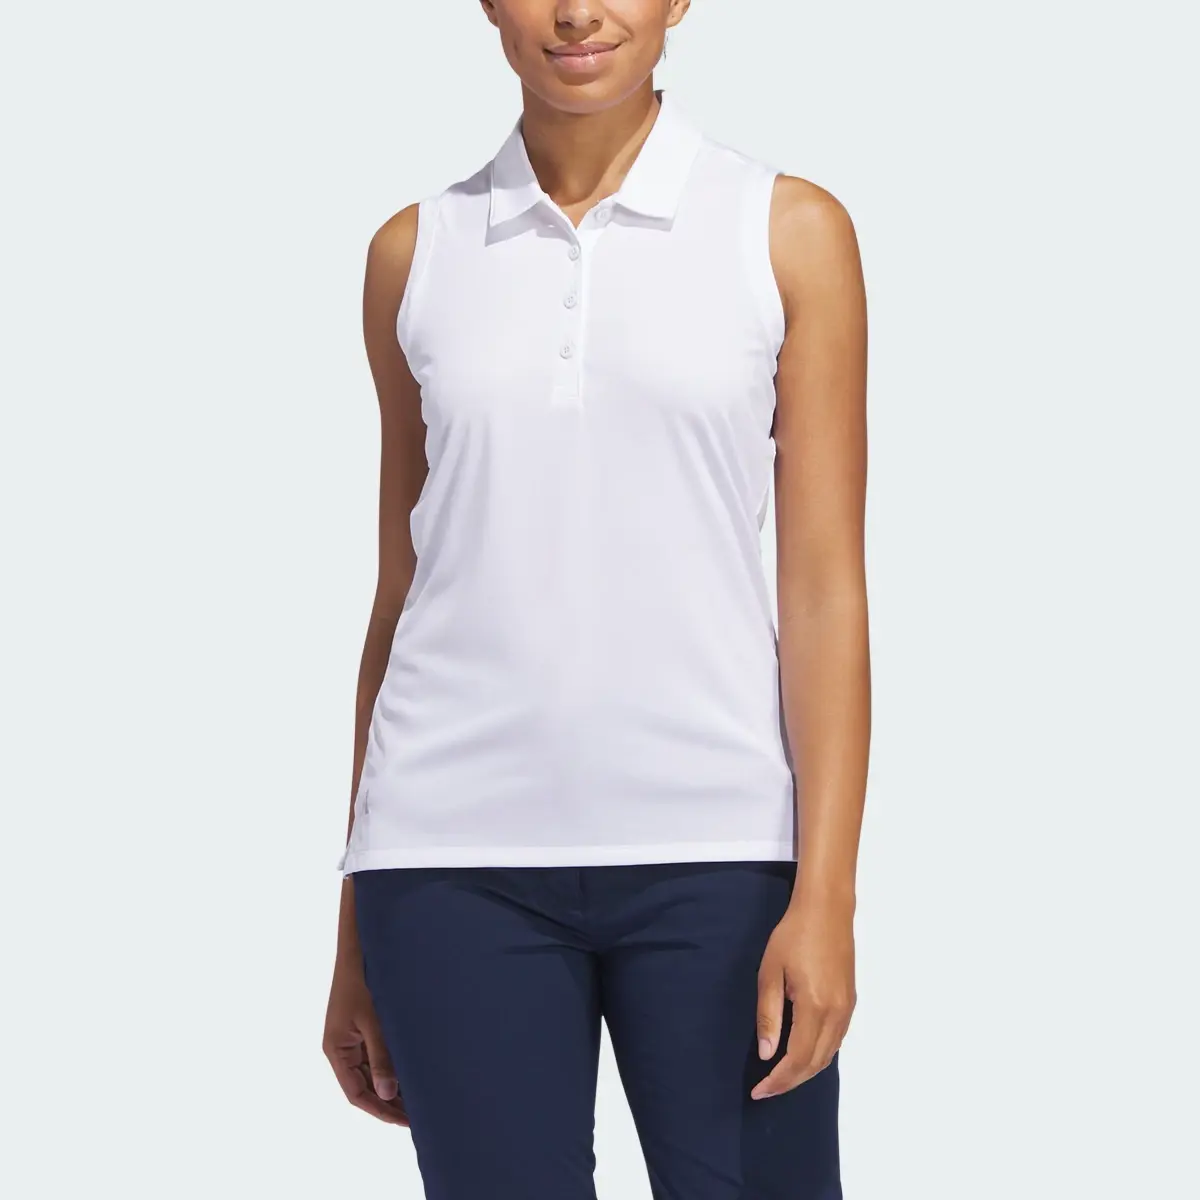 Adidas Ultimate365 Solid Sleeveless Polo Shirt. 1